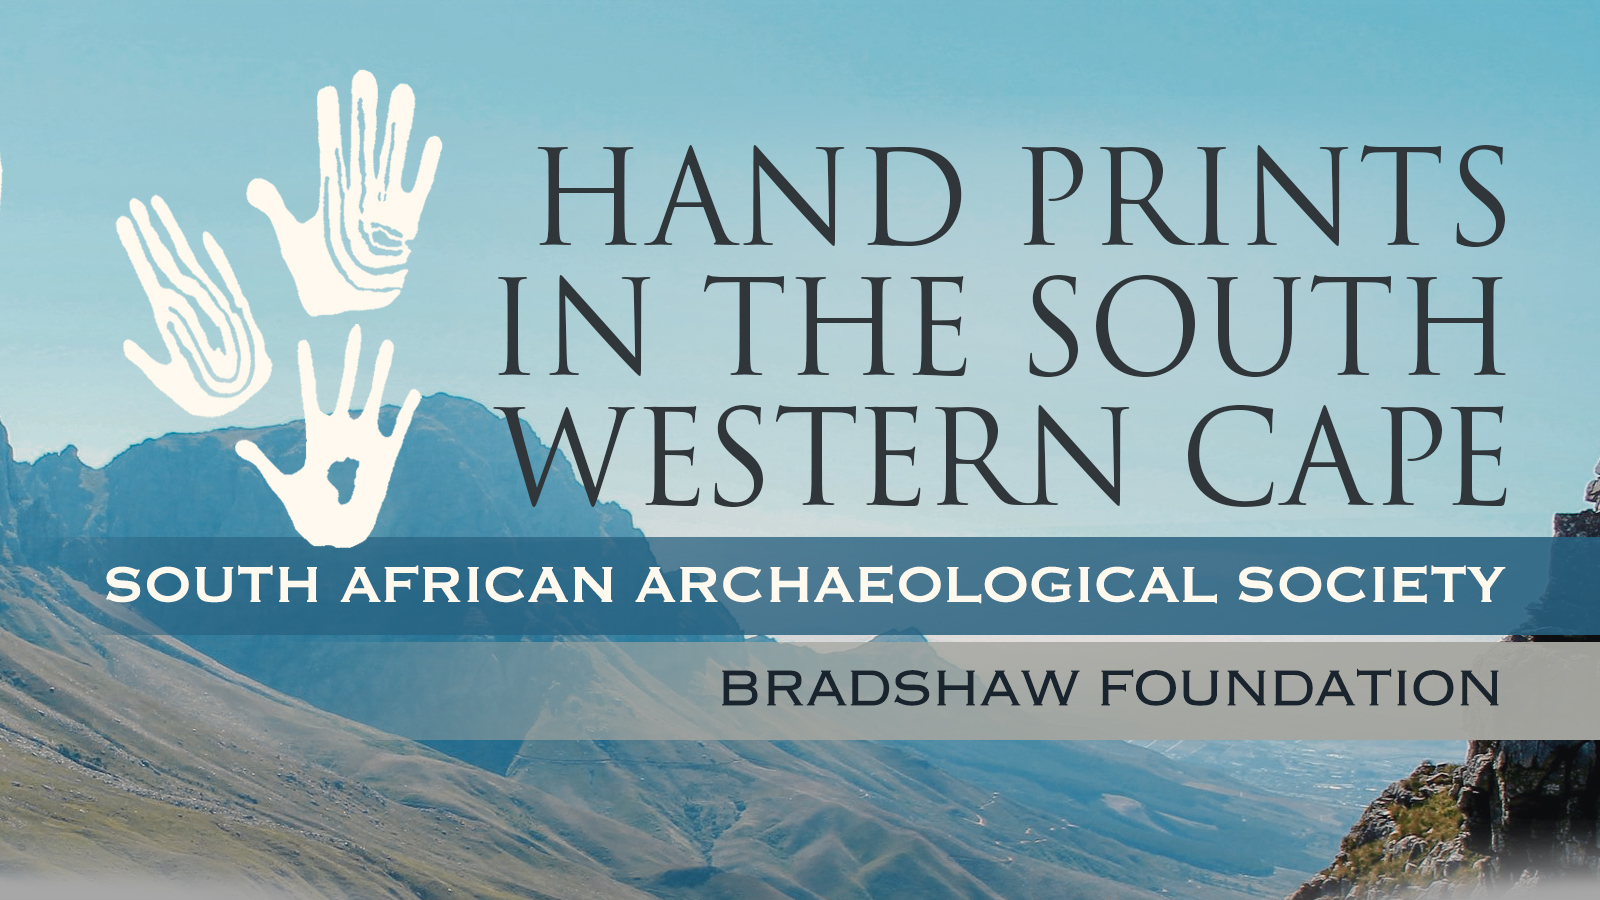 Hand Paintings Engravings Rock Art Archaeology Bradshaw Foundation